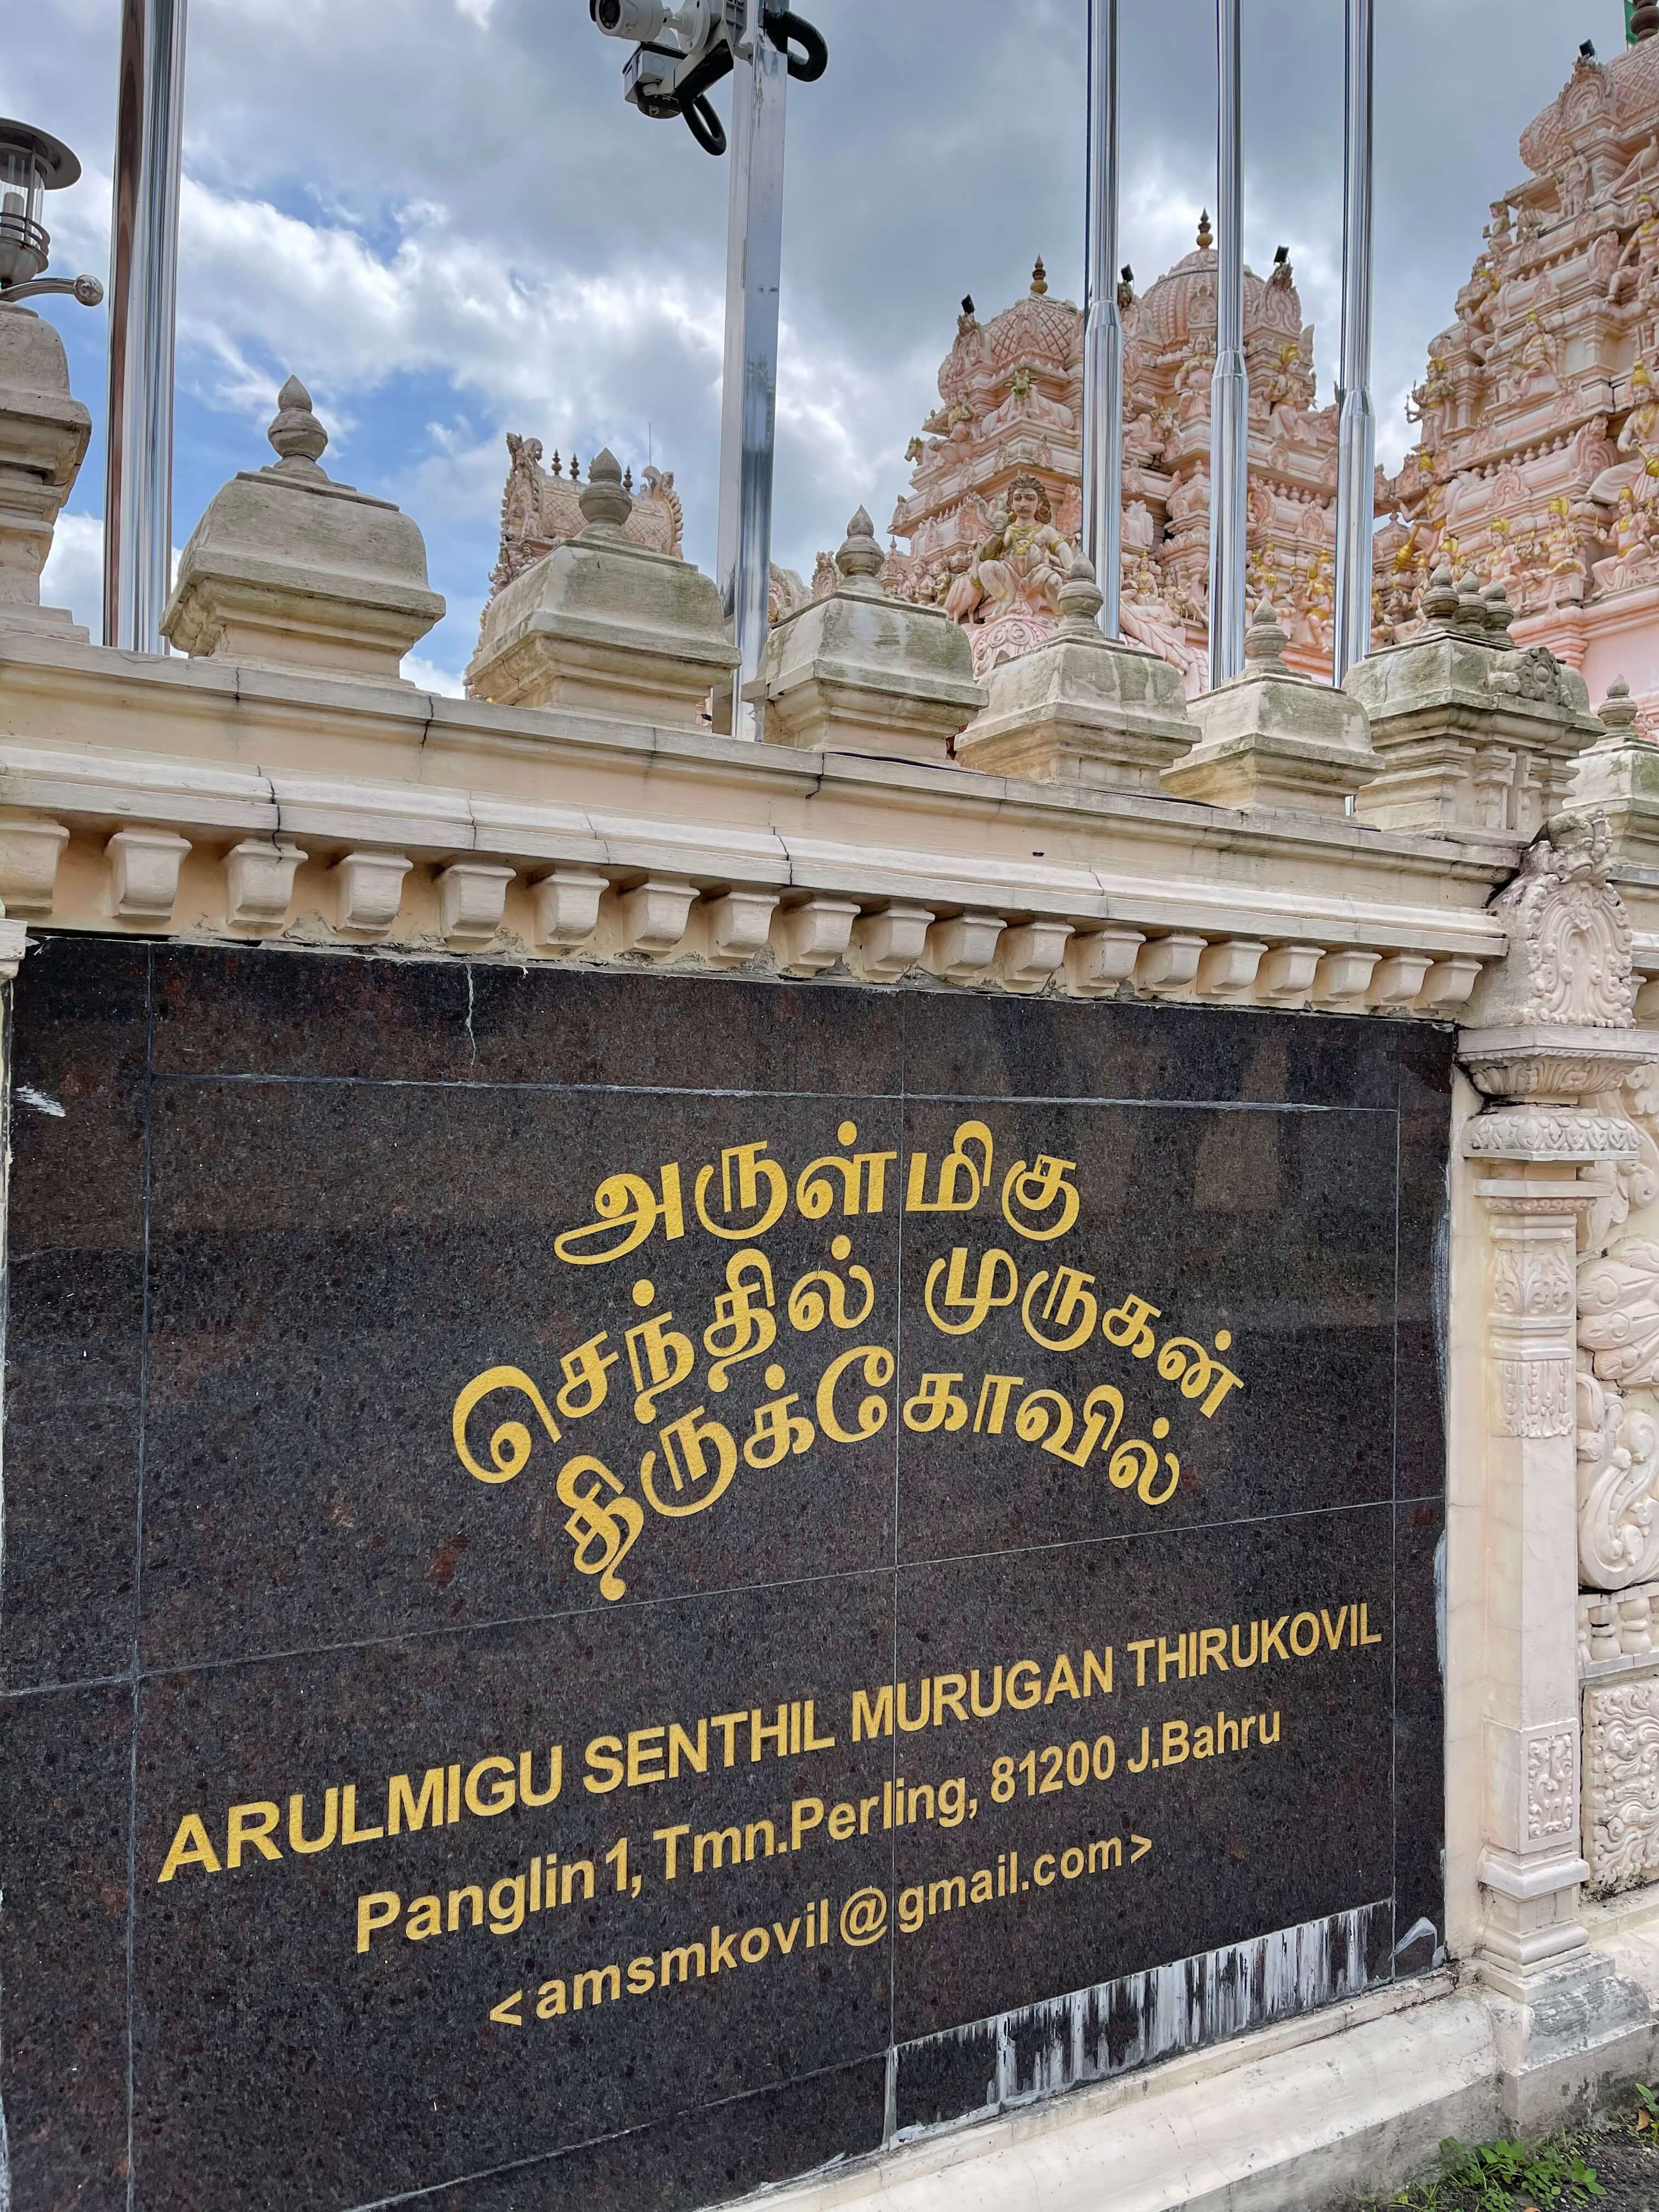 Arulmigu Senthil Murugan Thirukovil